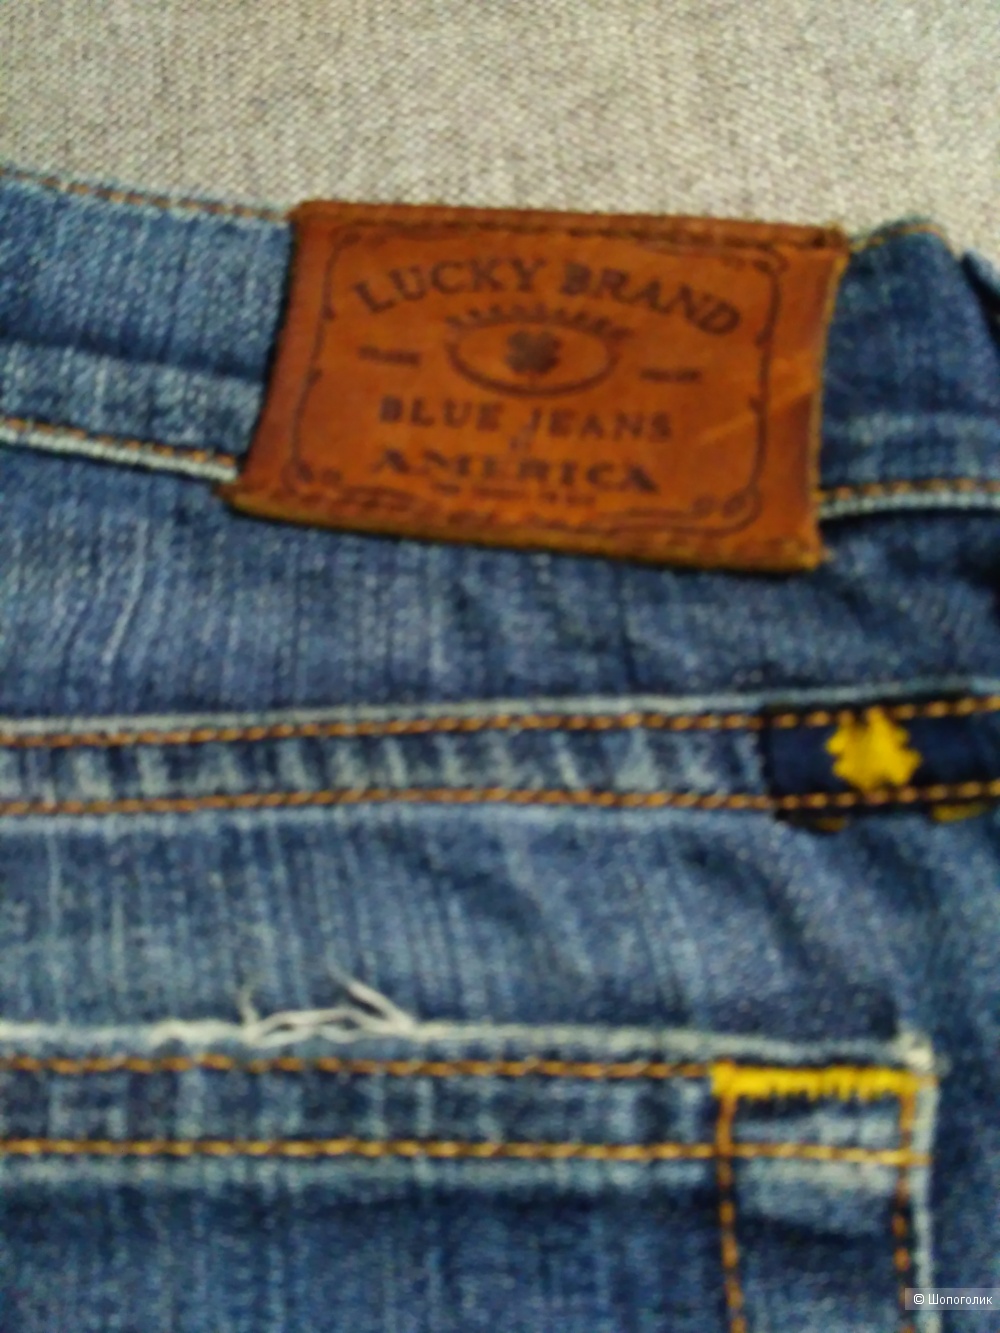 Lucky Brand джинсы, р. 42-44